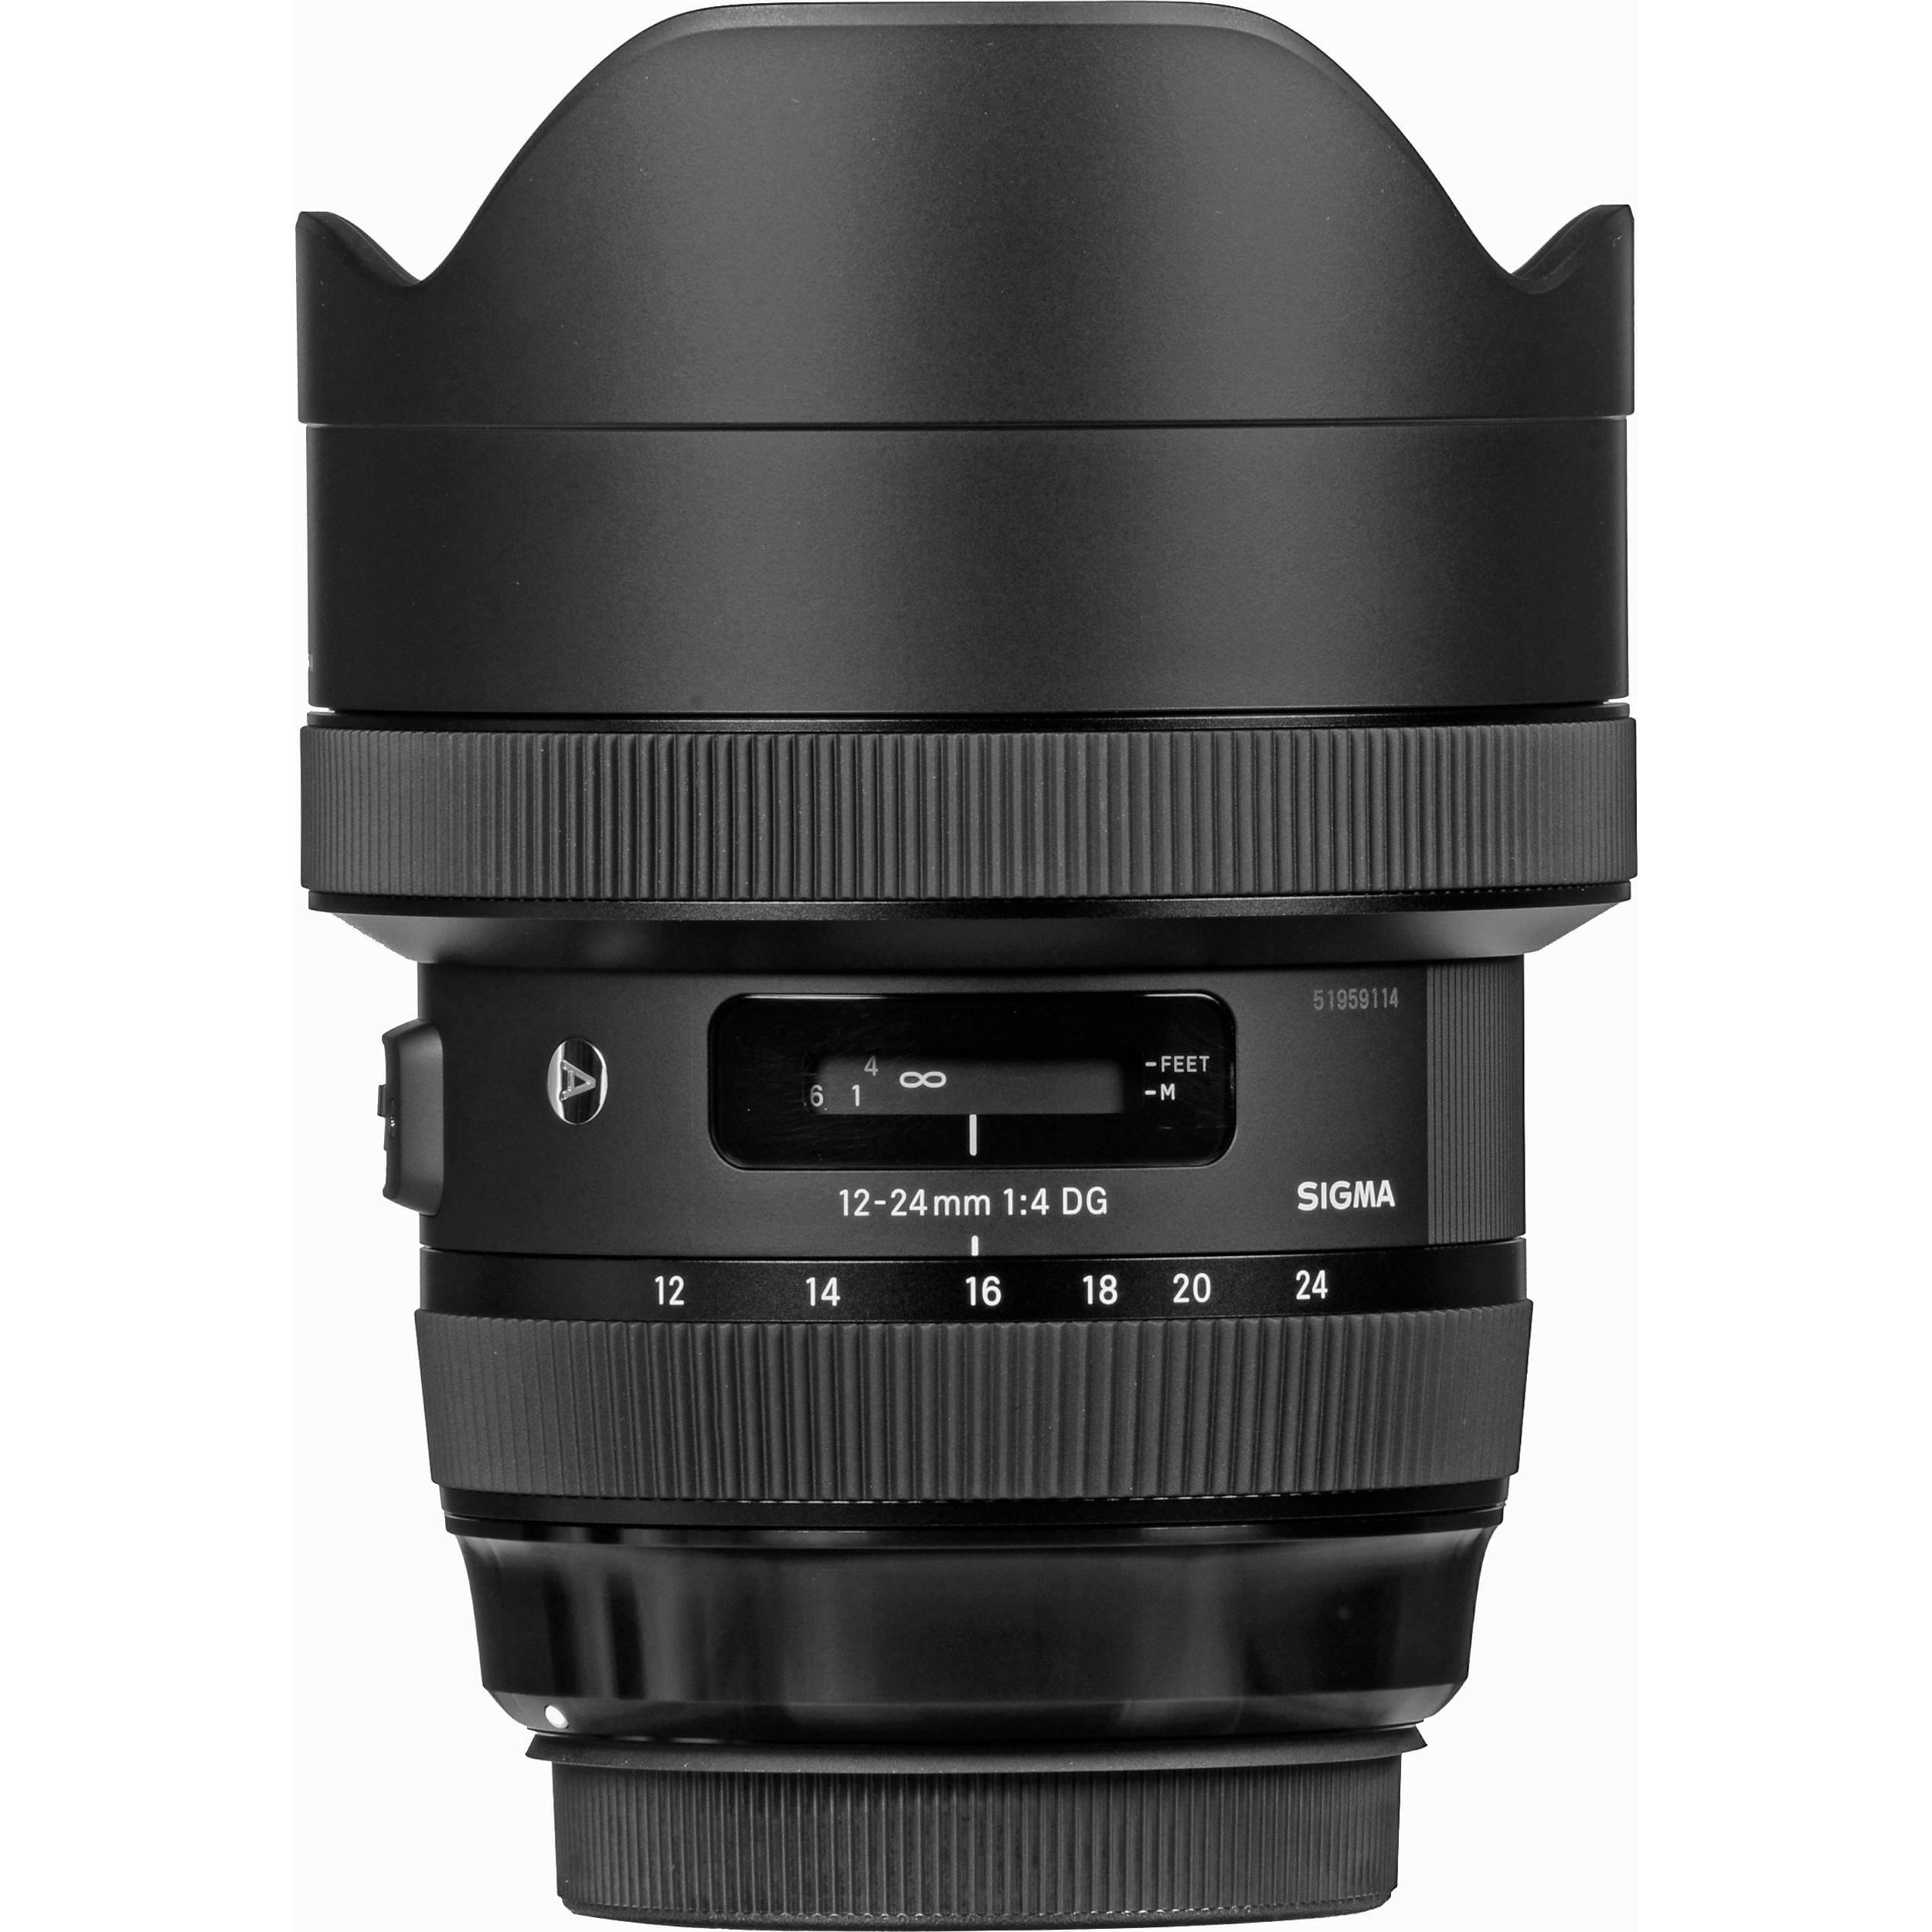 Sigma 12-24mm f/4 DG HSM Art real estate camera lens